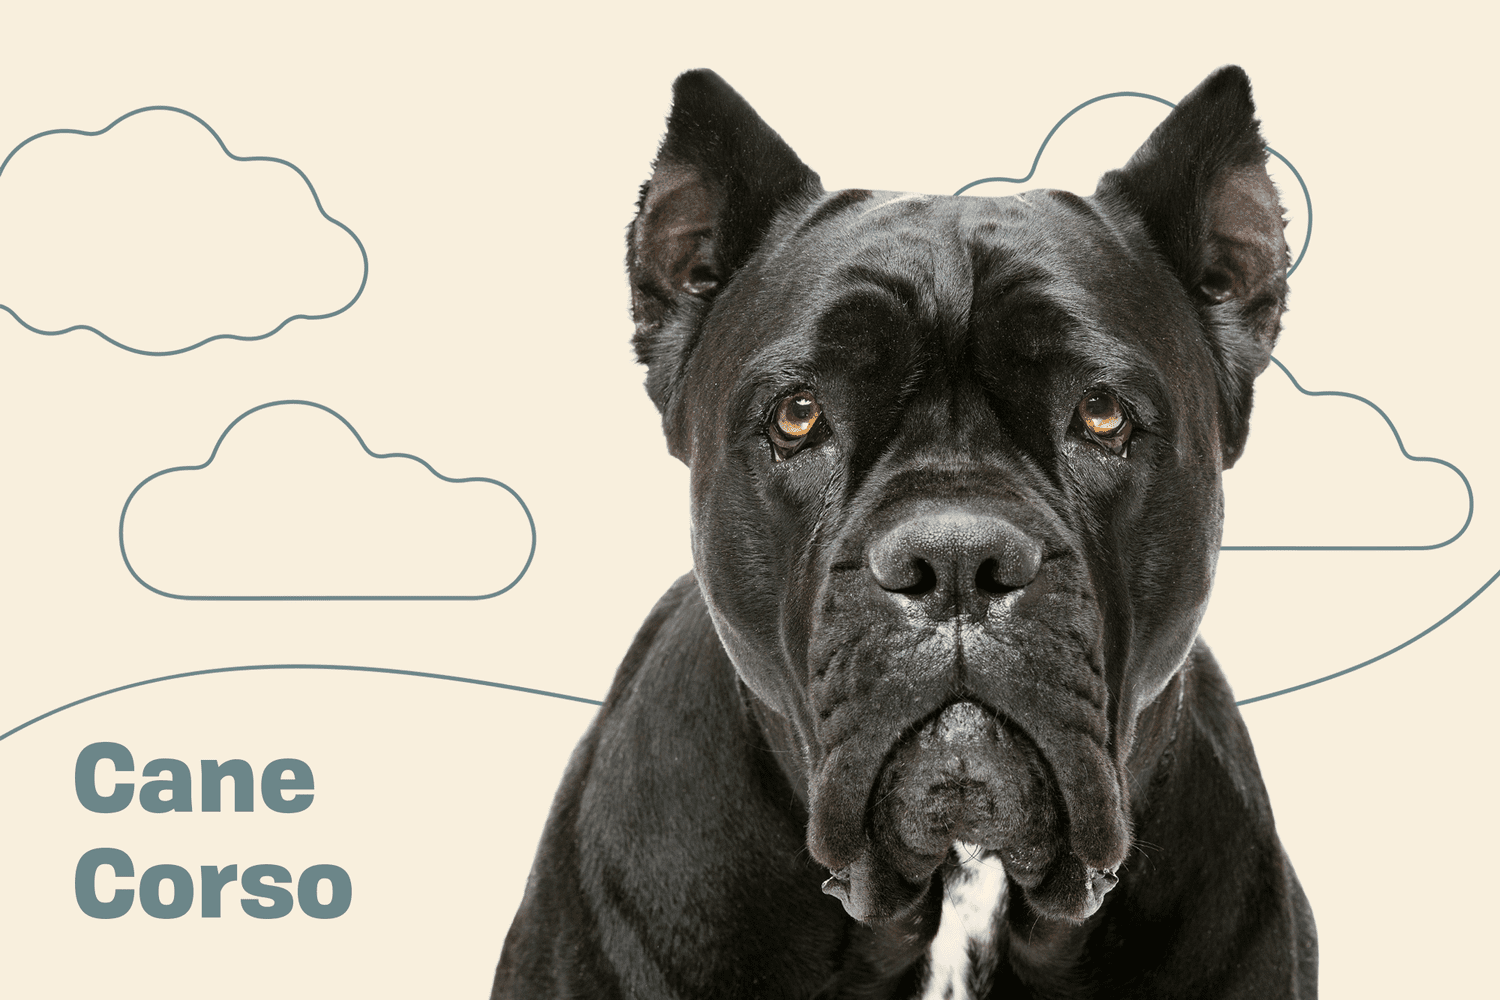 Original despair Steep Cane Corso Dog Breed Information & Characteristics | Daily Paws